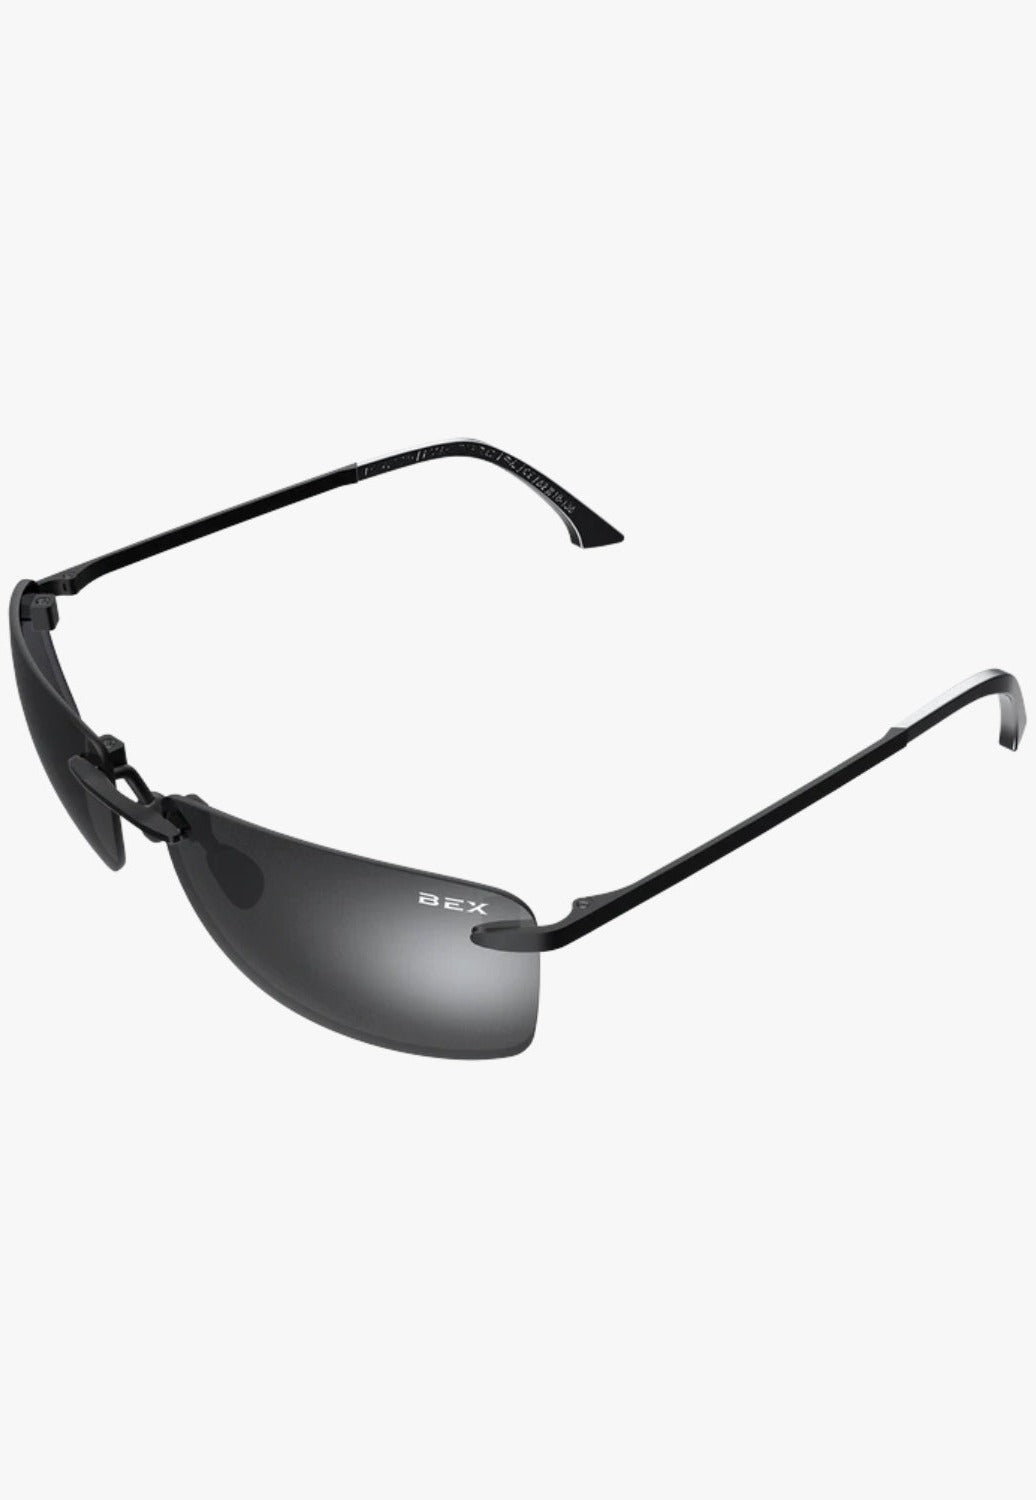 BEX ACCESSORIES-Sunglasses Black/Grey BEX Legolas Sunglasses